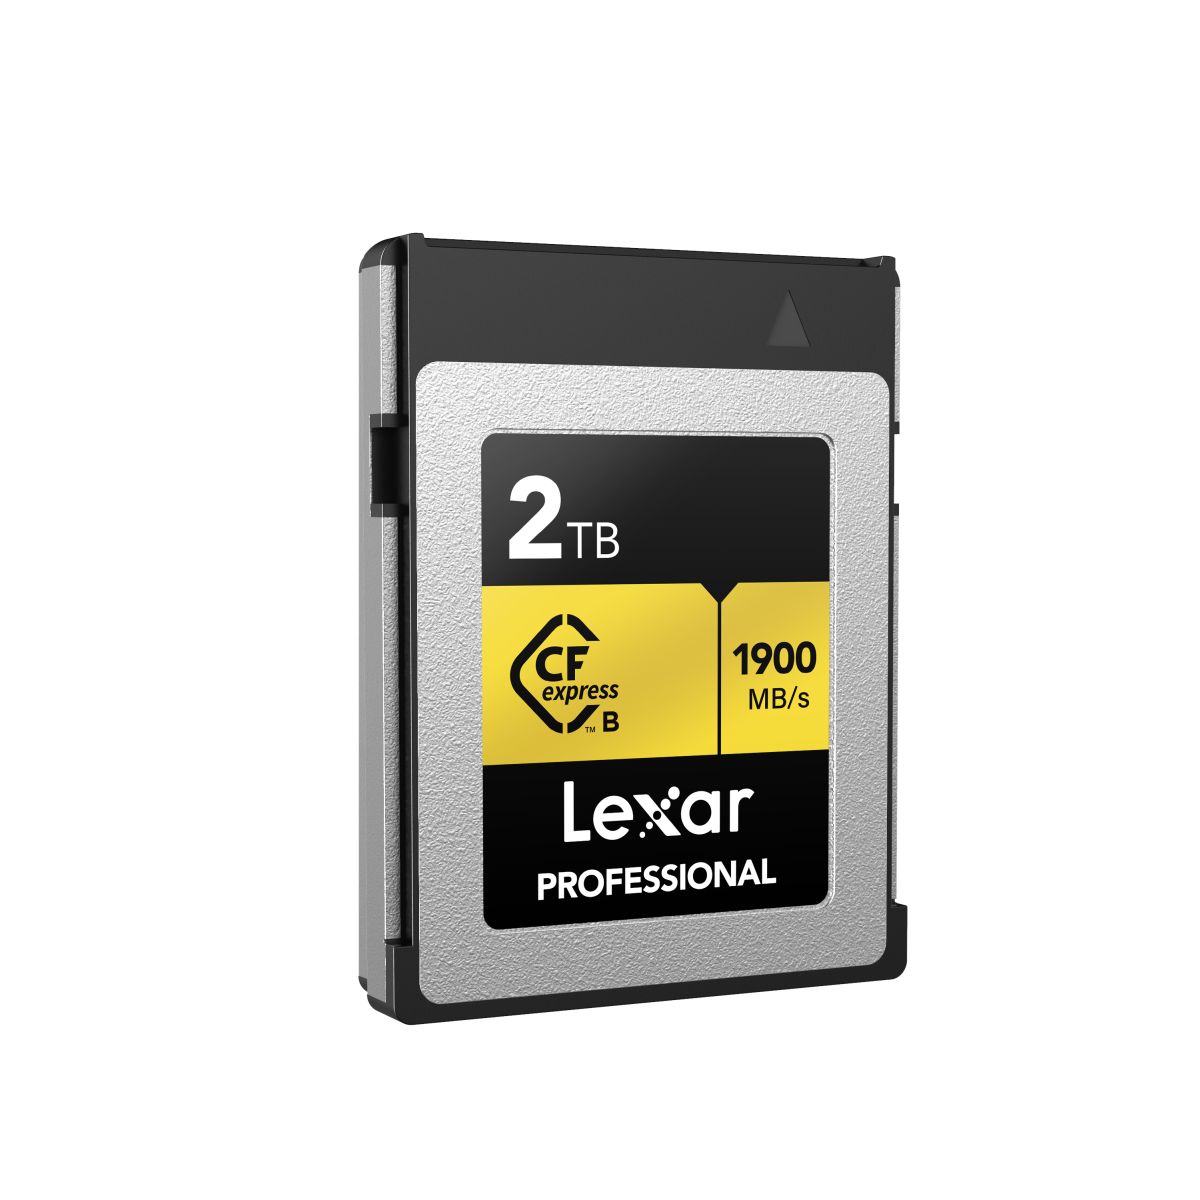 Lexar 2TB CFexpress PRO Gold Type B 1500 MB/s